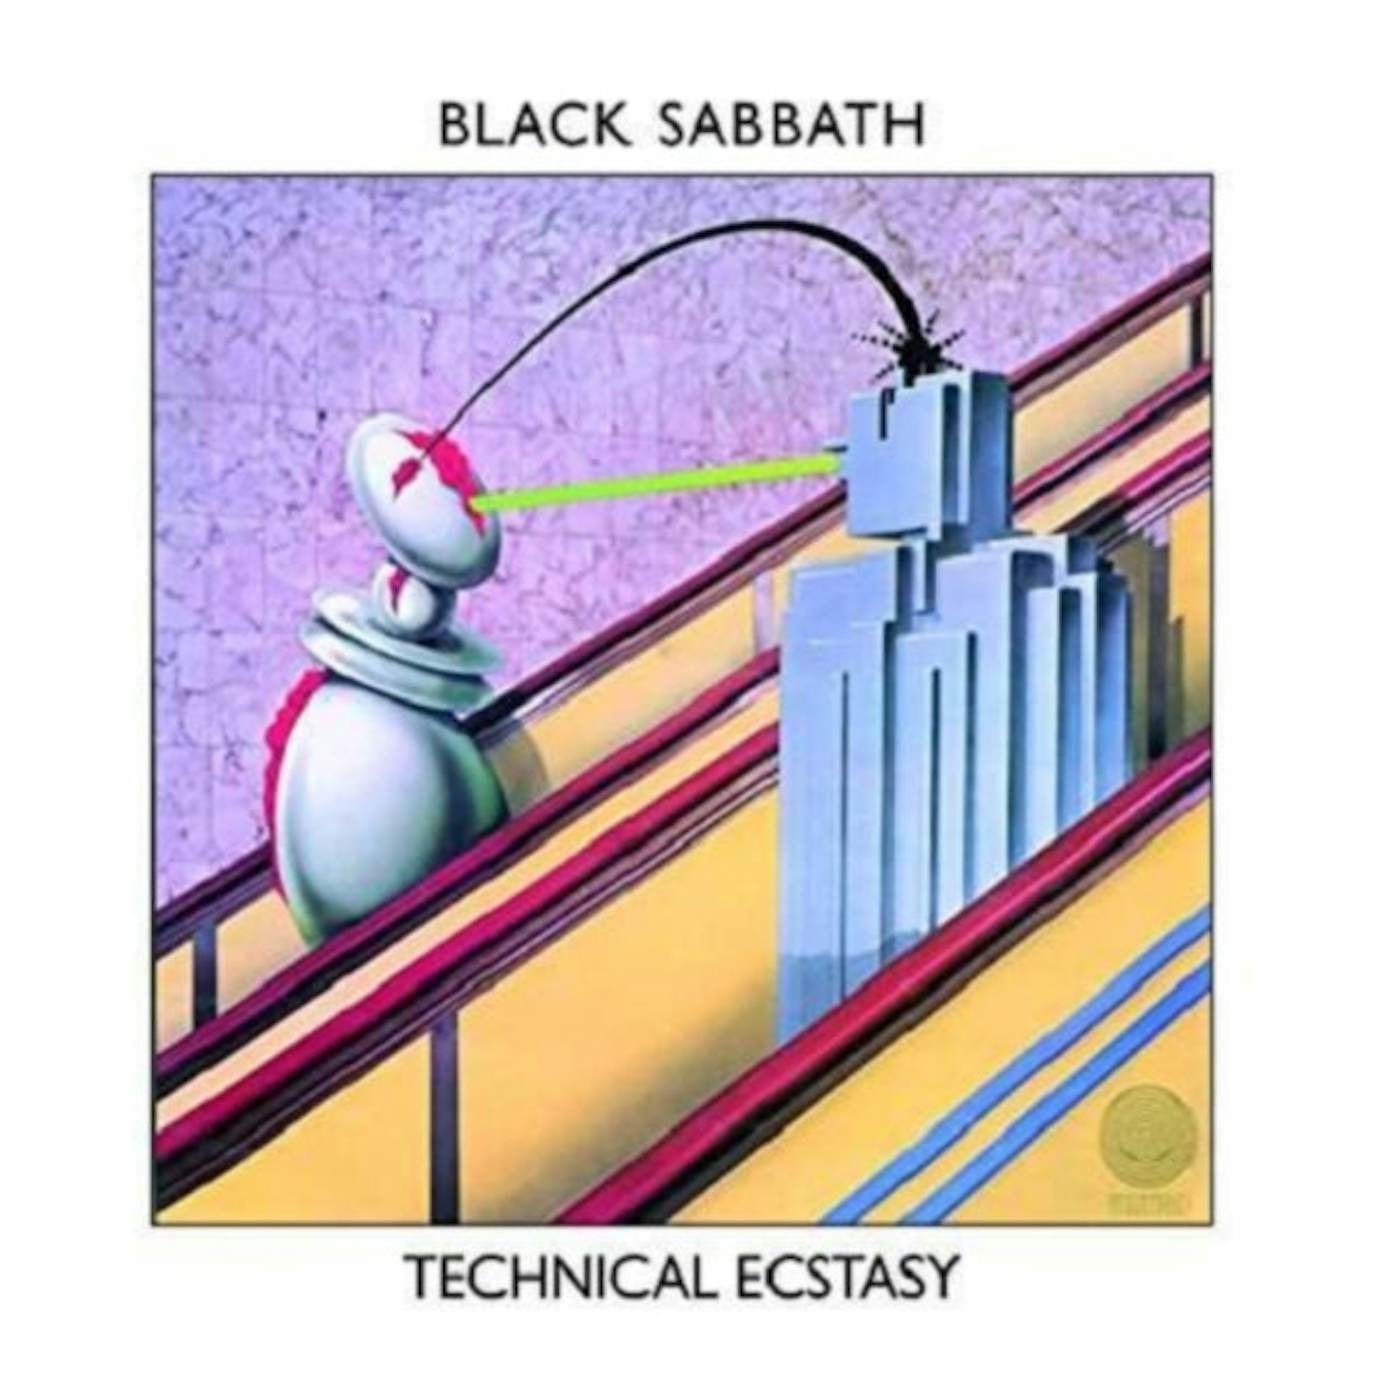 Black Sabbath LP Vinyl Record - Technical Ecstasy